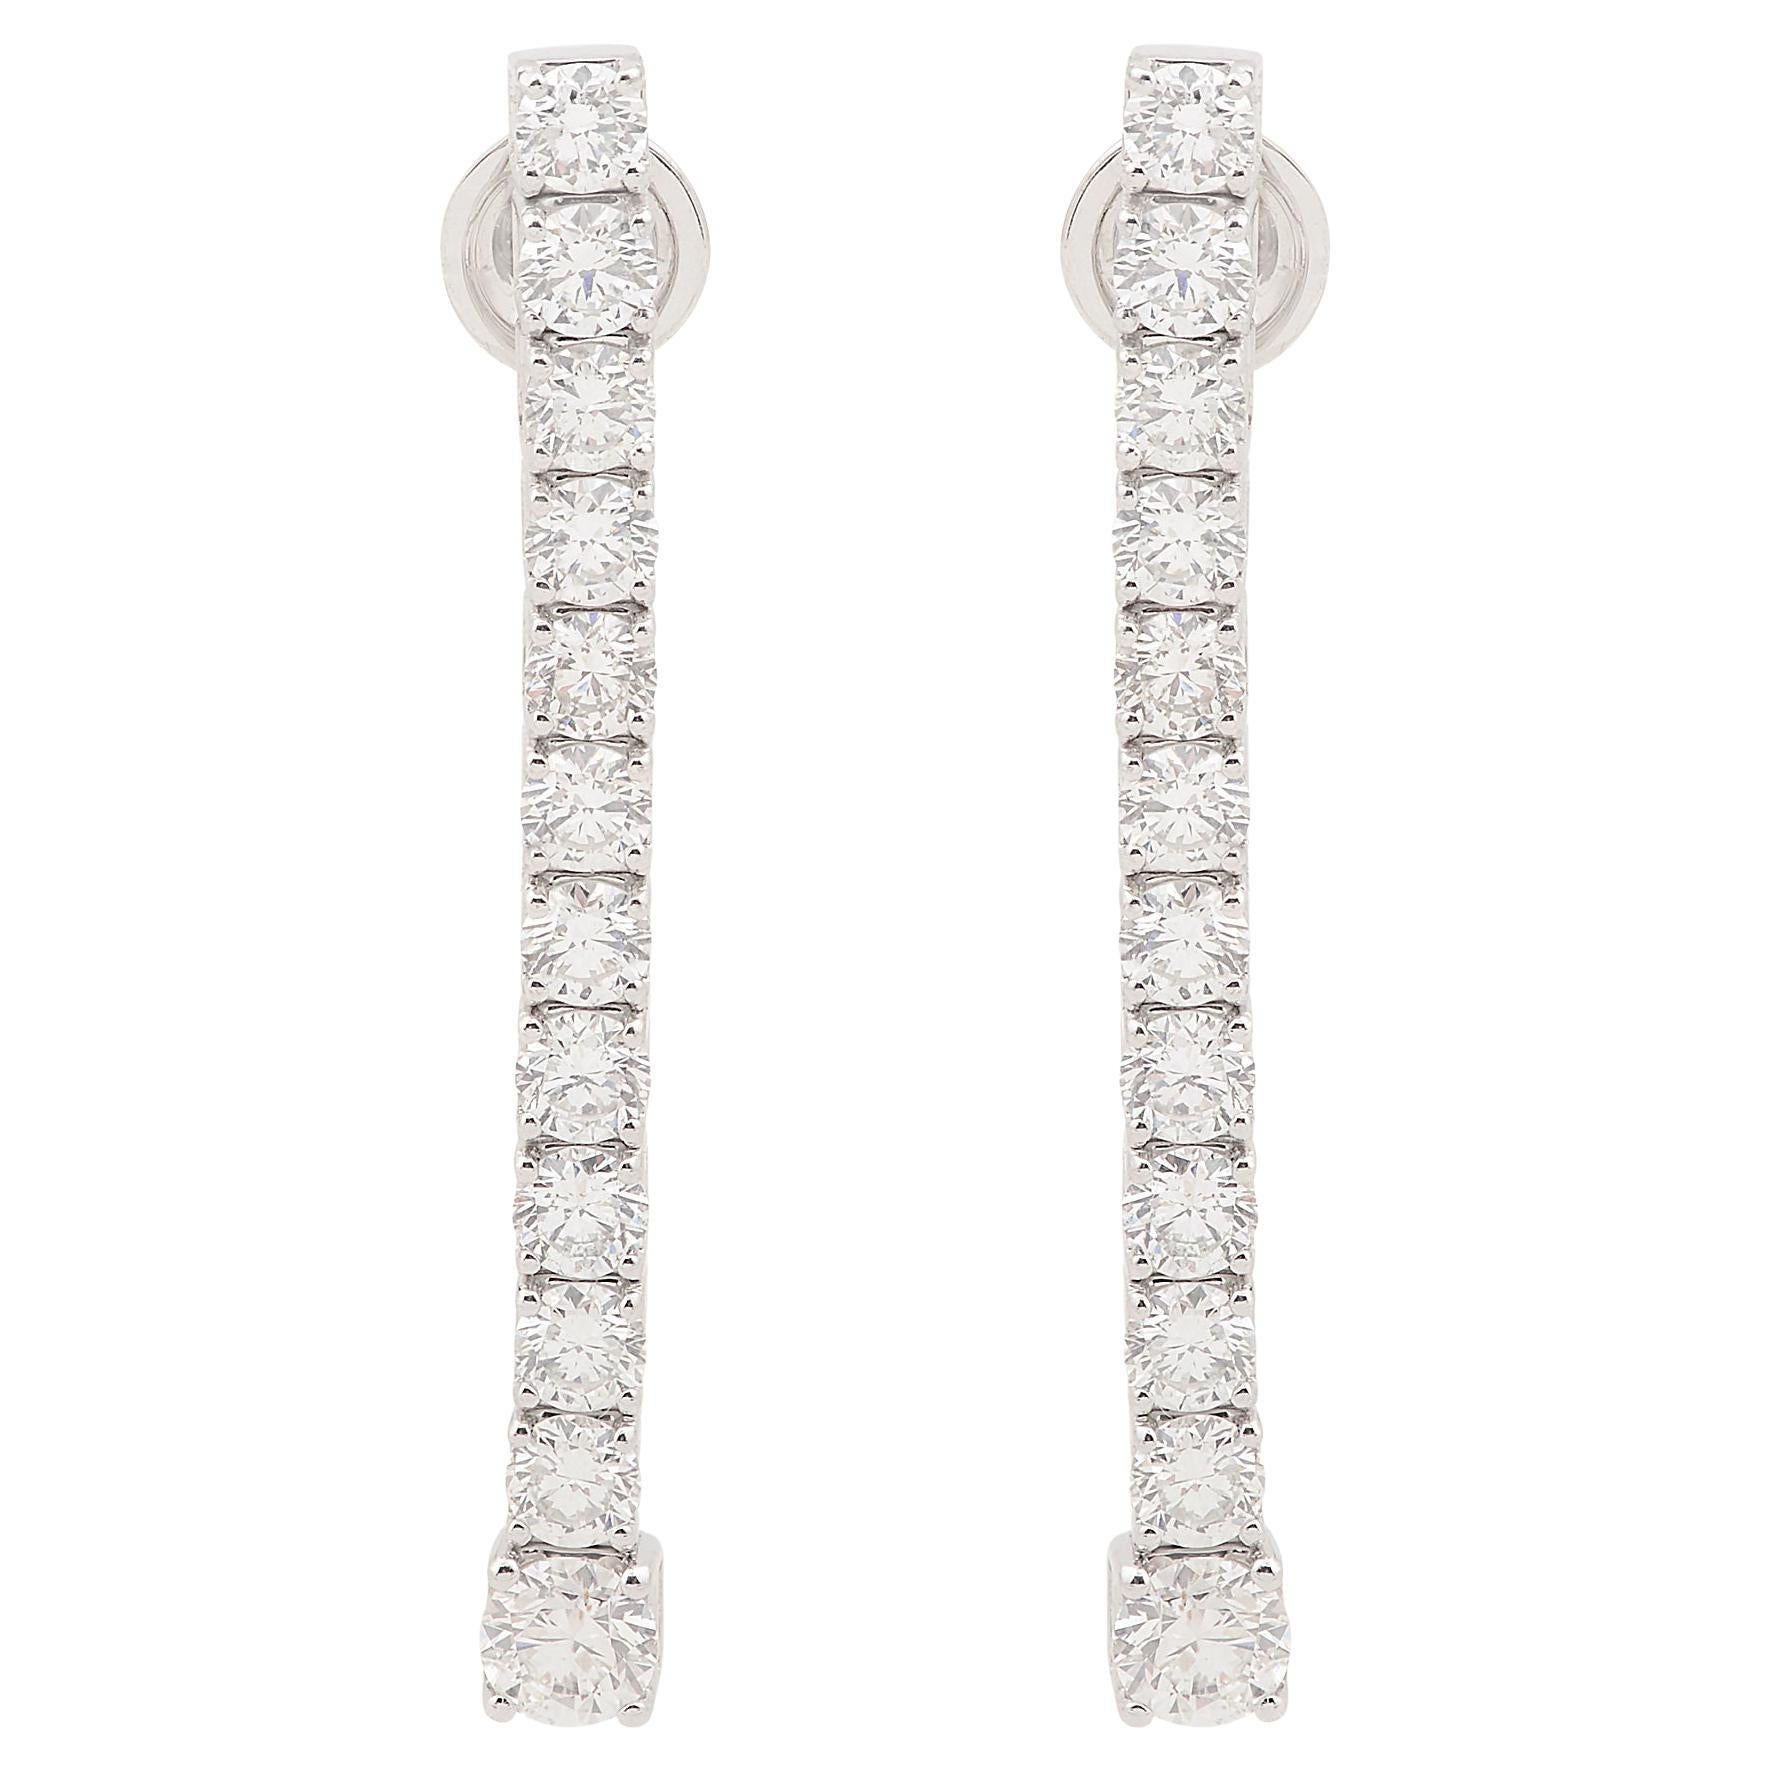 3.30 Carat Diamond Bar Dangle Earrings Solid 14k White Gold Handmade Jewelry New For Sale